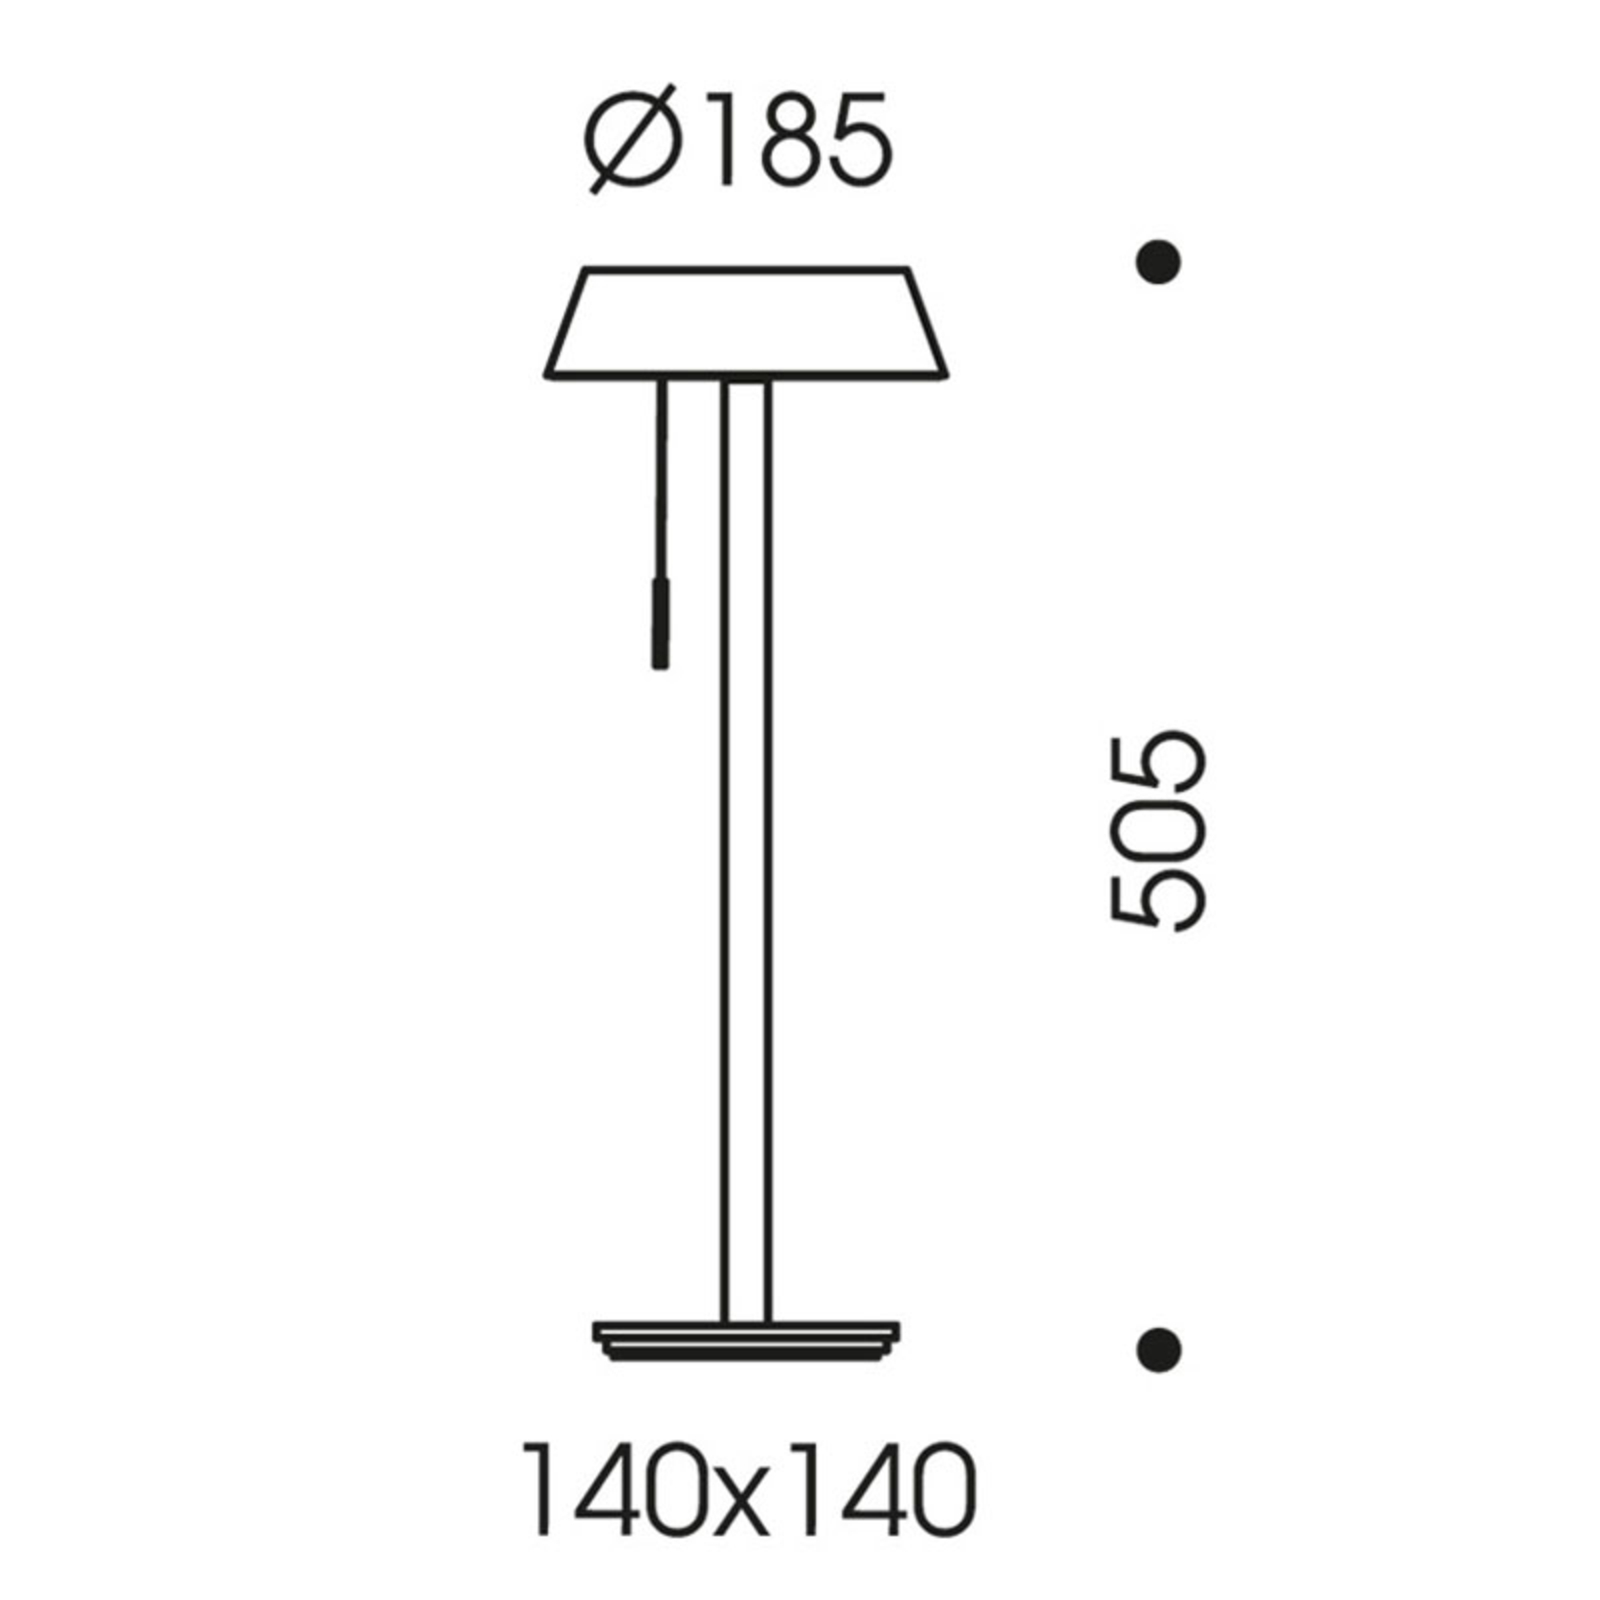 OLIGO Glance lampe à poser LED grise mate